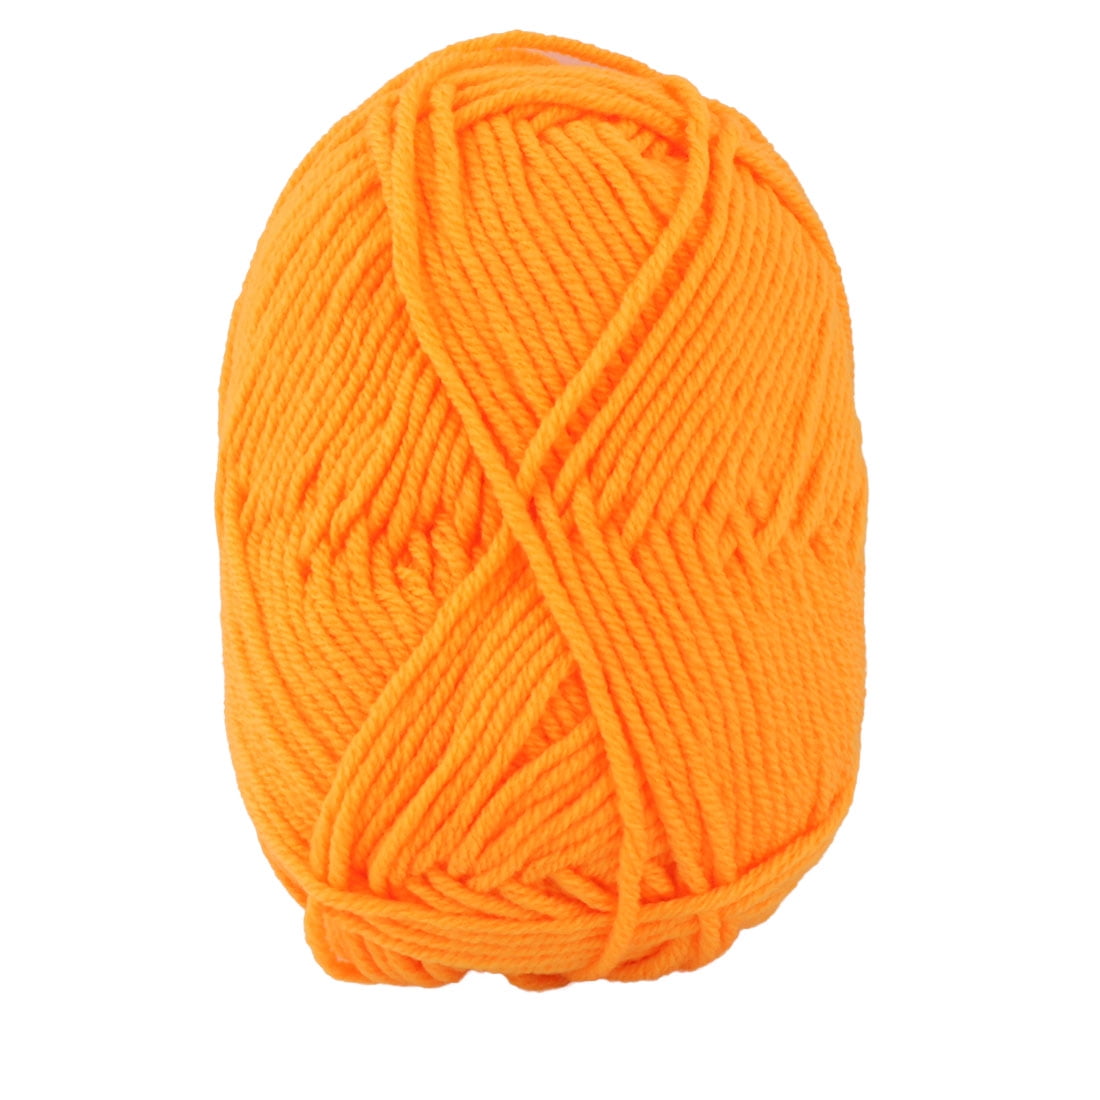 Ball of Yarn Orange